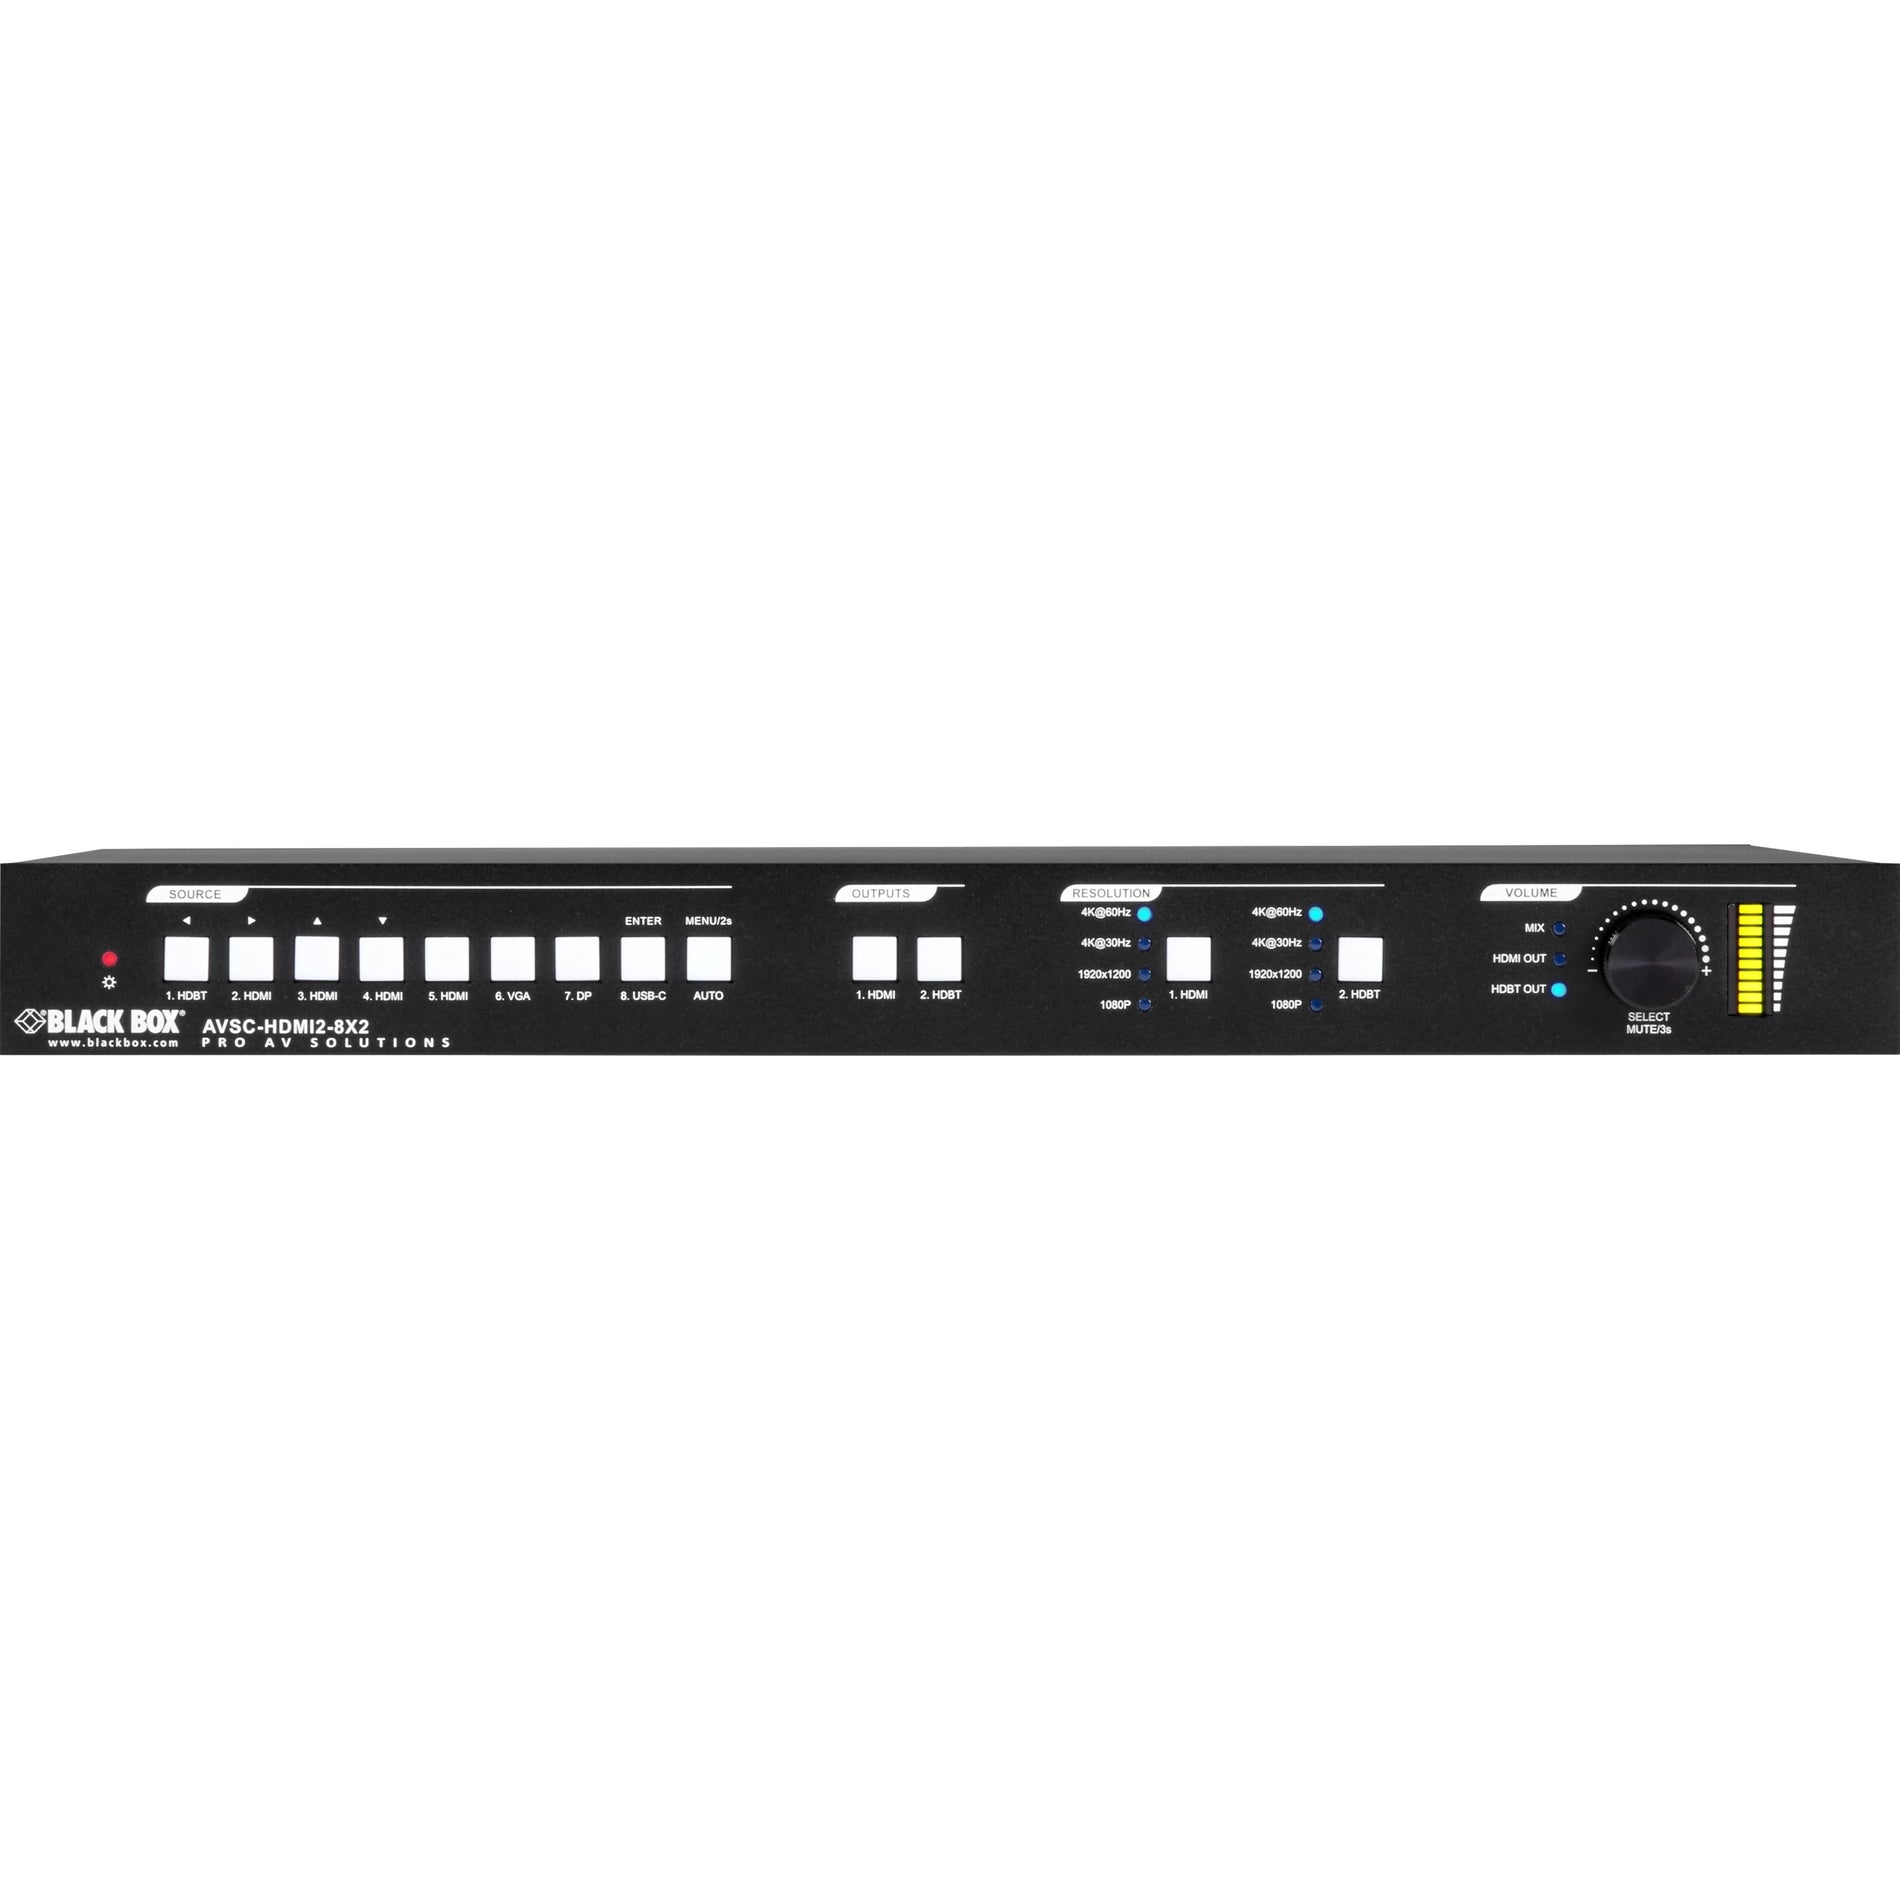 Black Box AVSC-HDMI2-8X2 8x2 Video Matrix Switcher, 18G Seamless Switching, HDMI 2.0